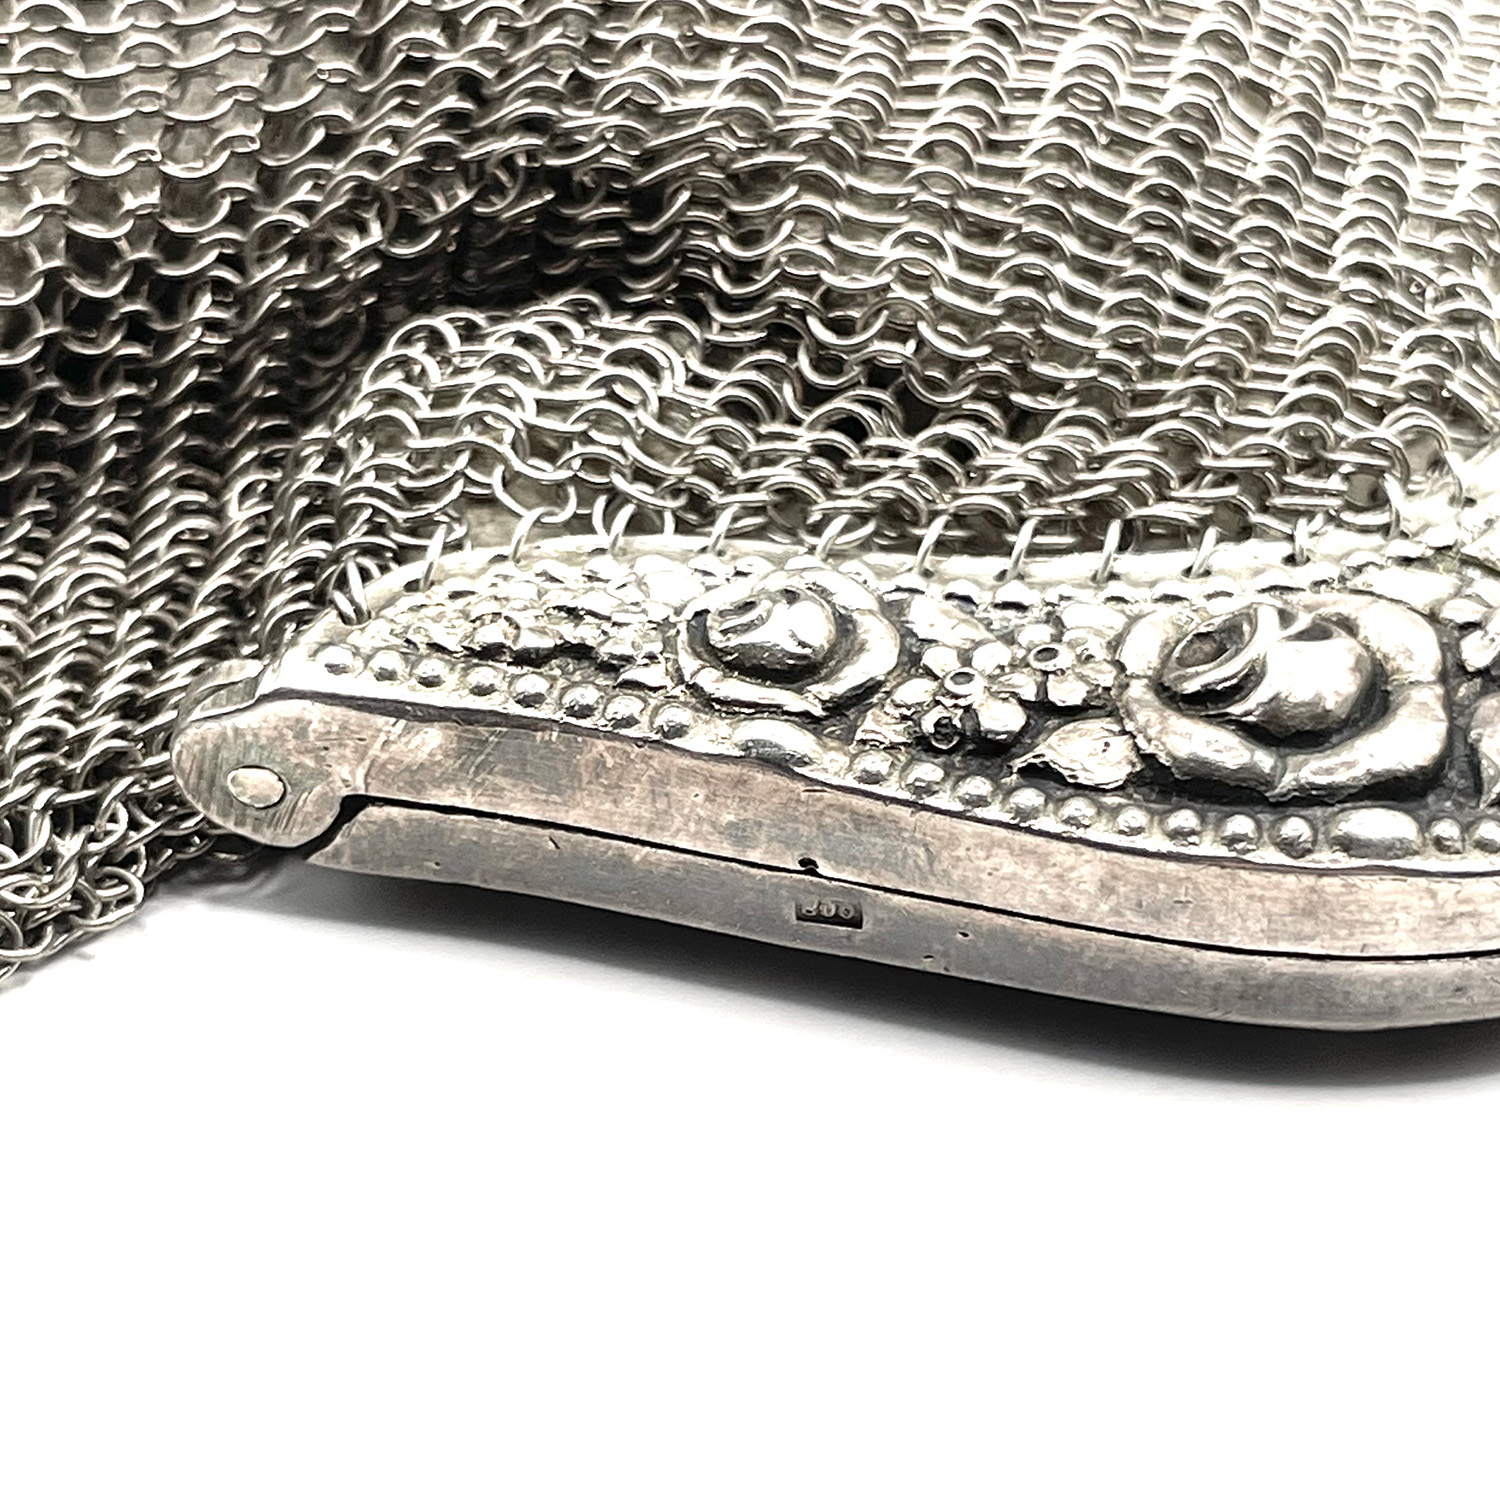 1920s 800 silver mesh handbag